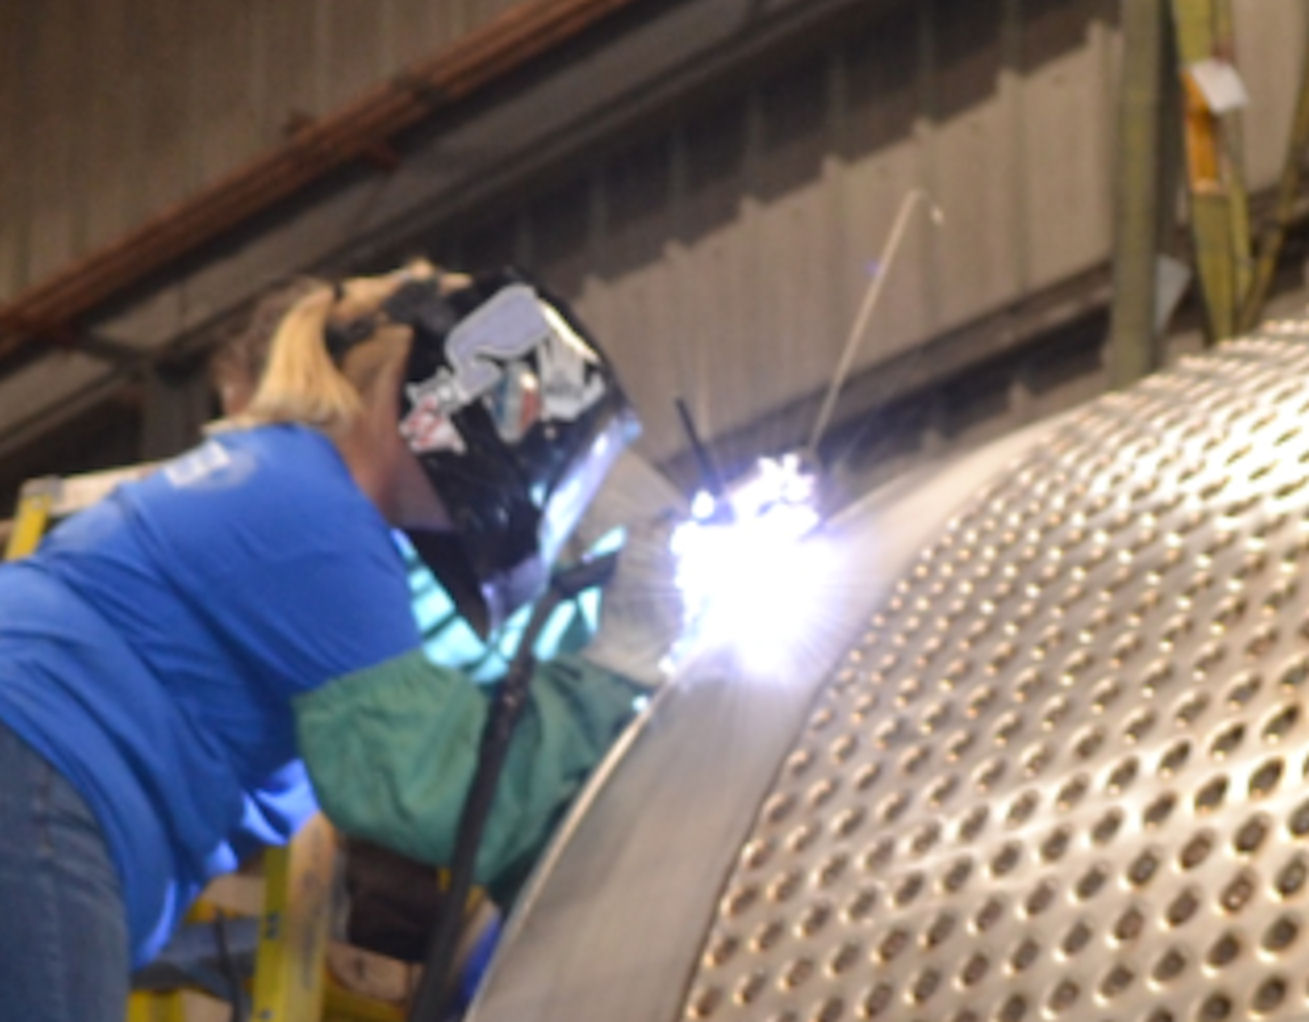 Apprentice welder learns on the job